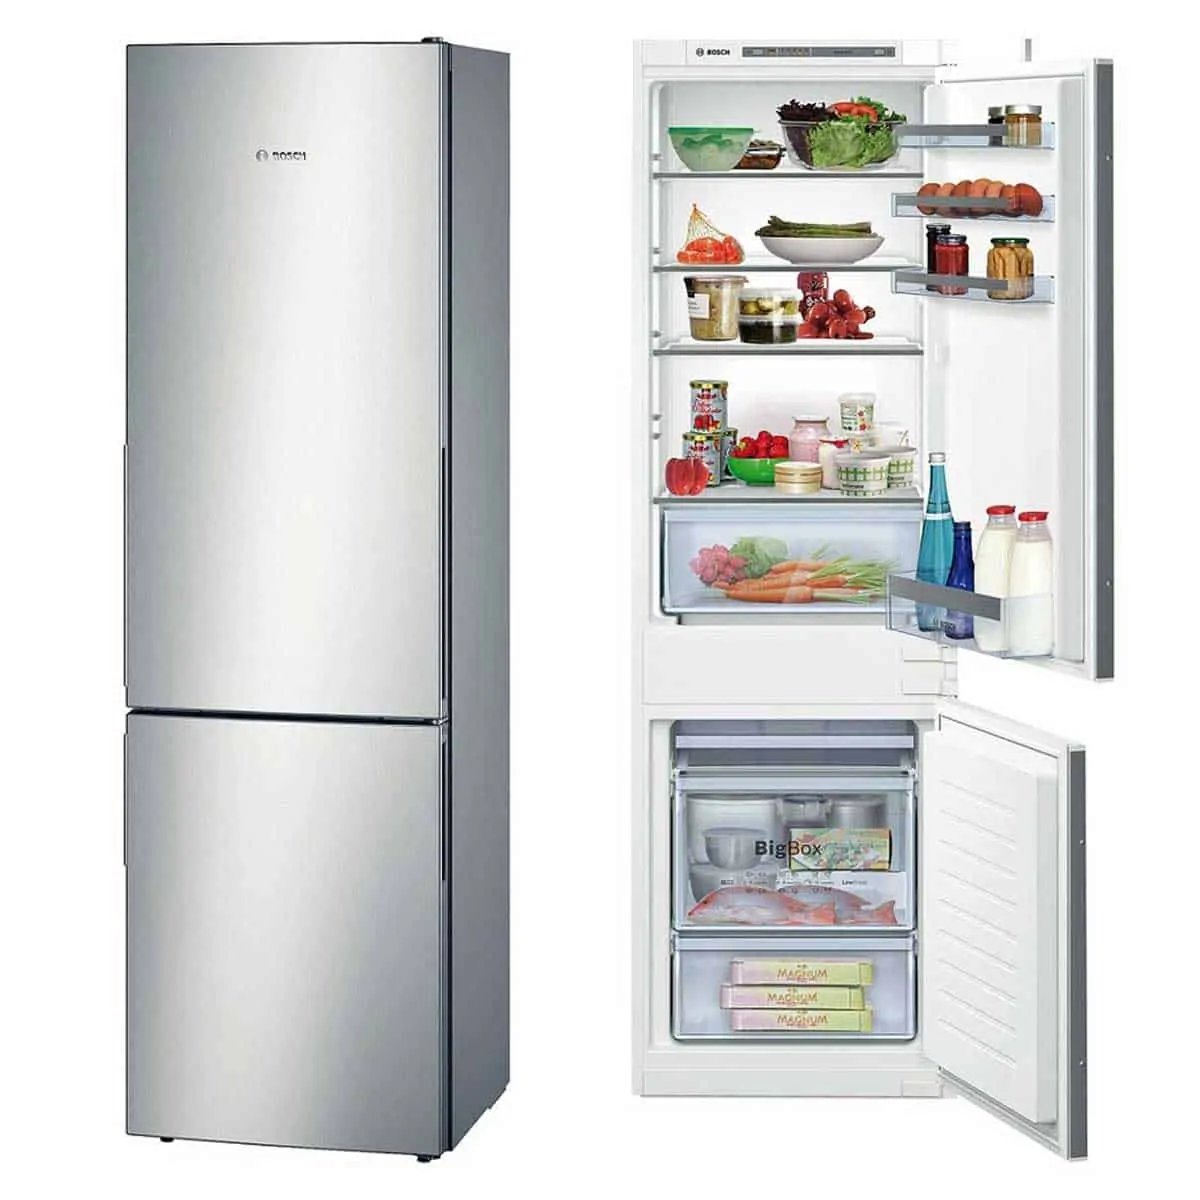 classifica migliori frigoriferi da incasso